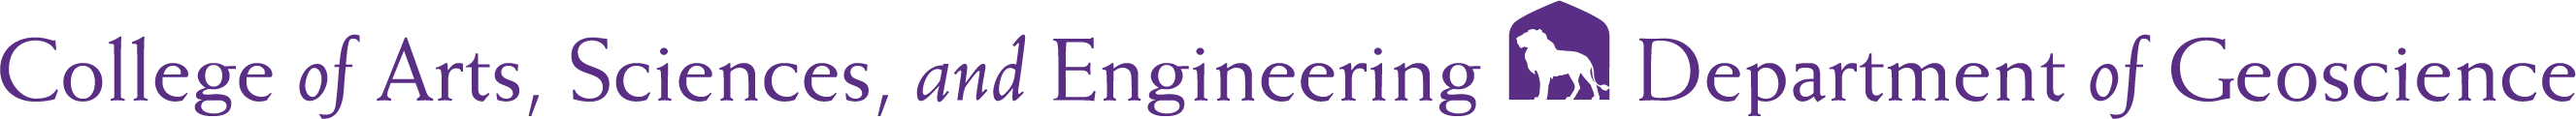 geoscience logo 2